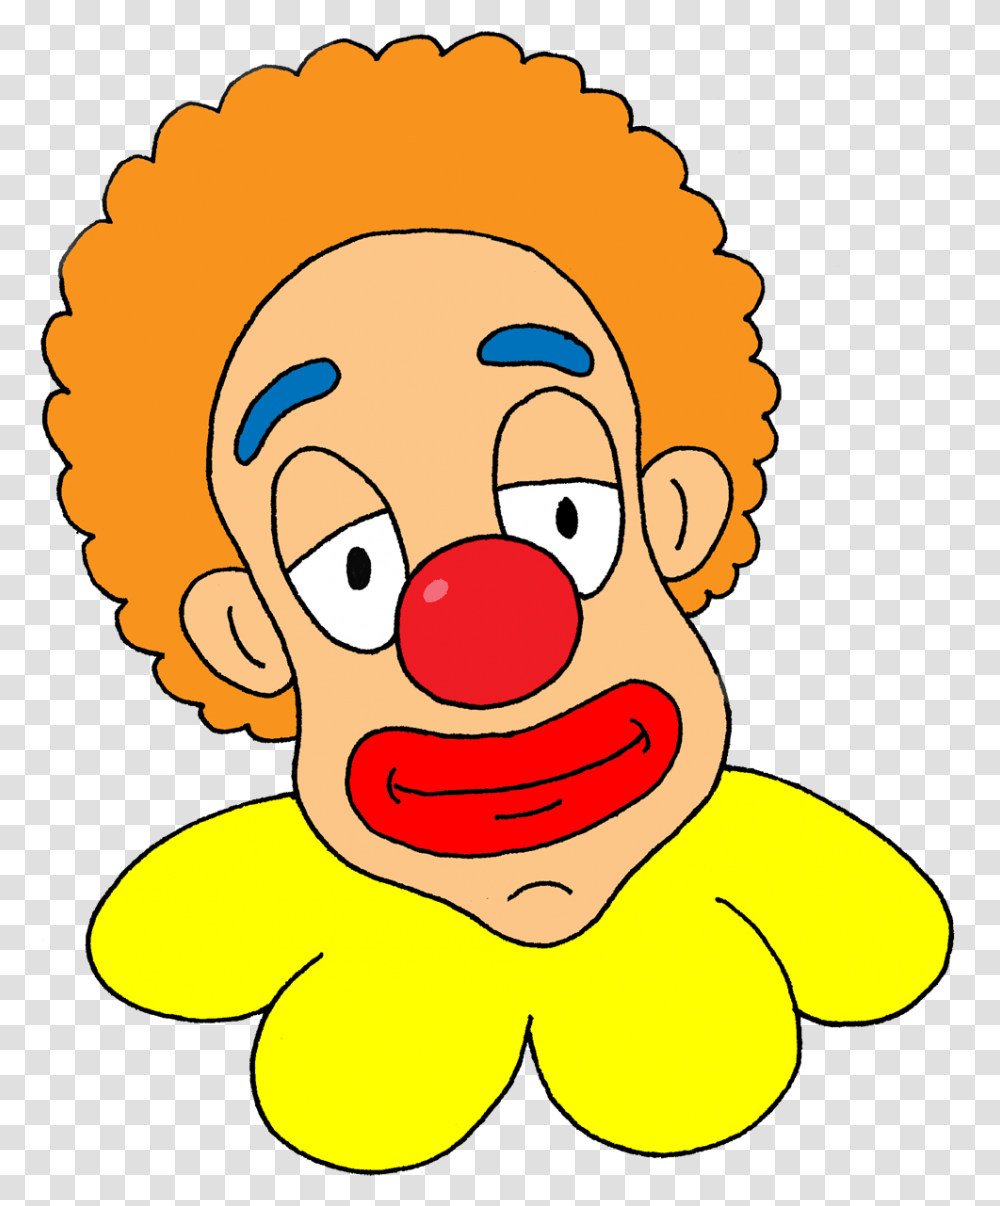 Image Of Clown Face 9 Clown 1 Clipart Joker Face Images Hd, Performer Transparent Png